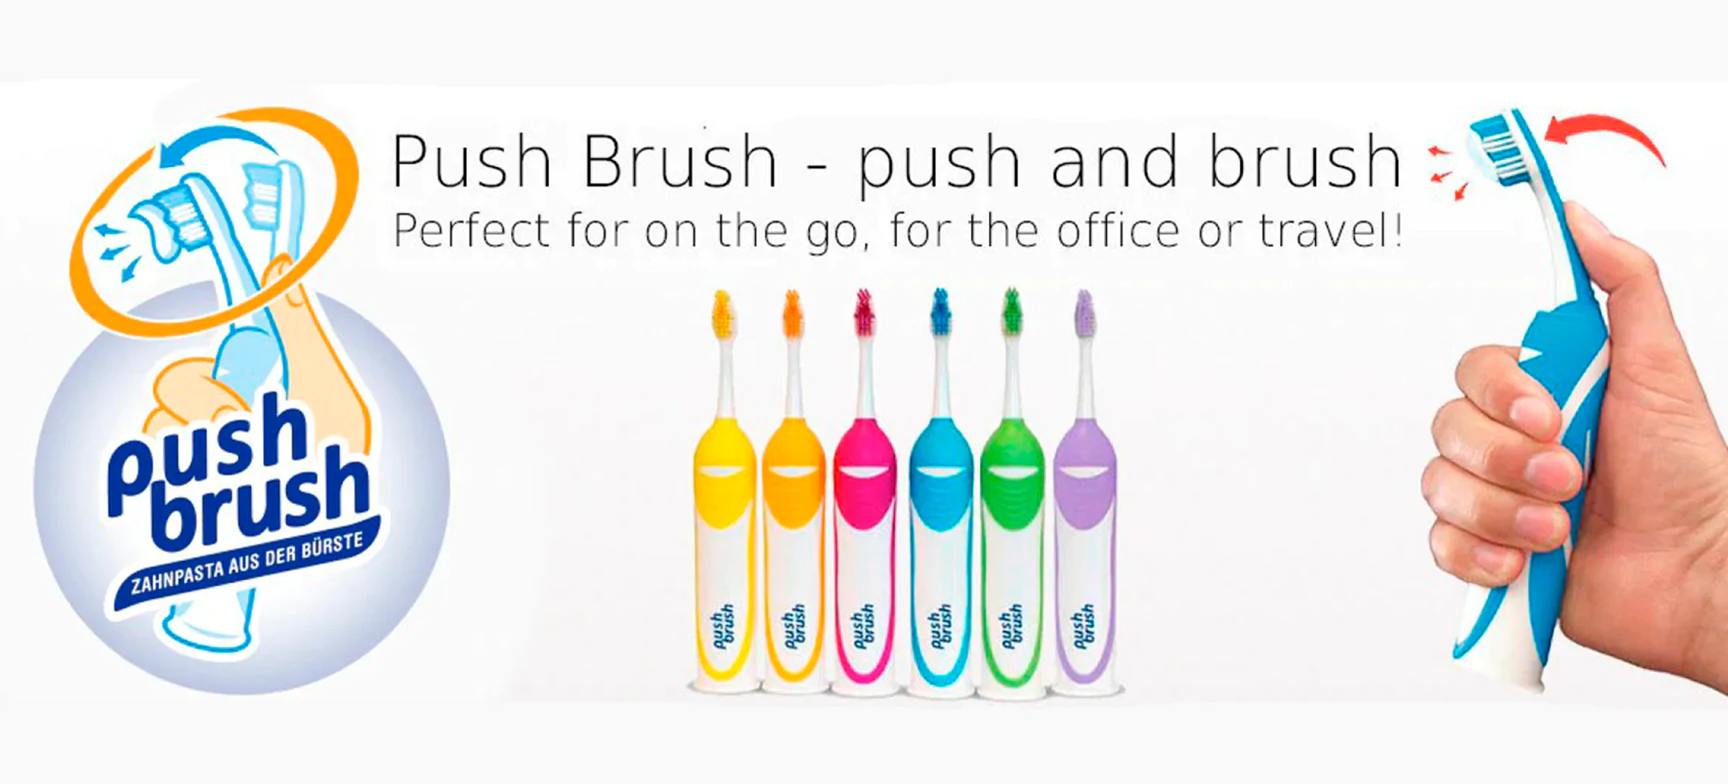 Push Brush